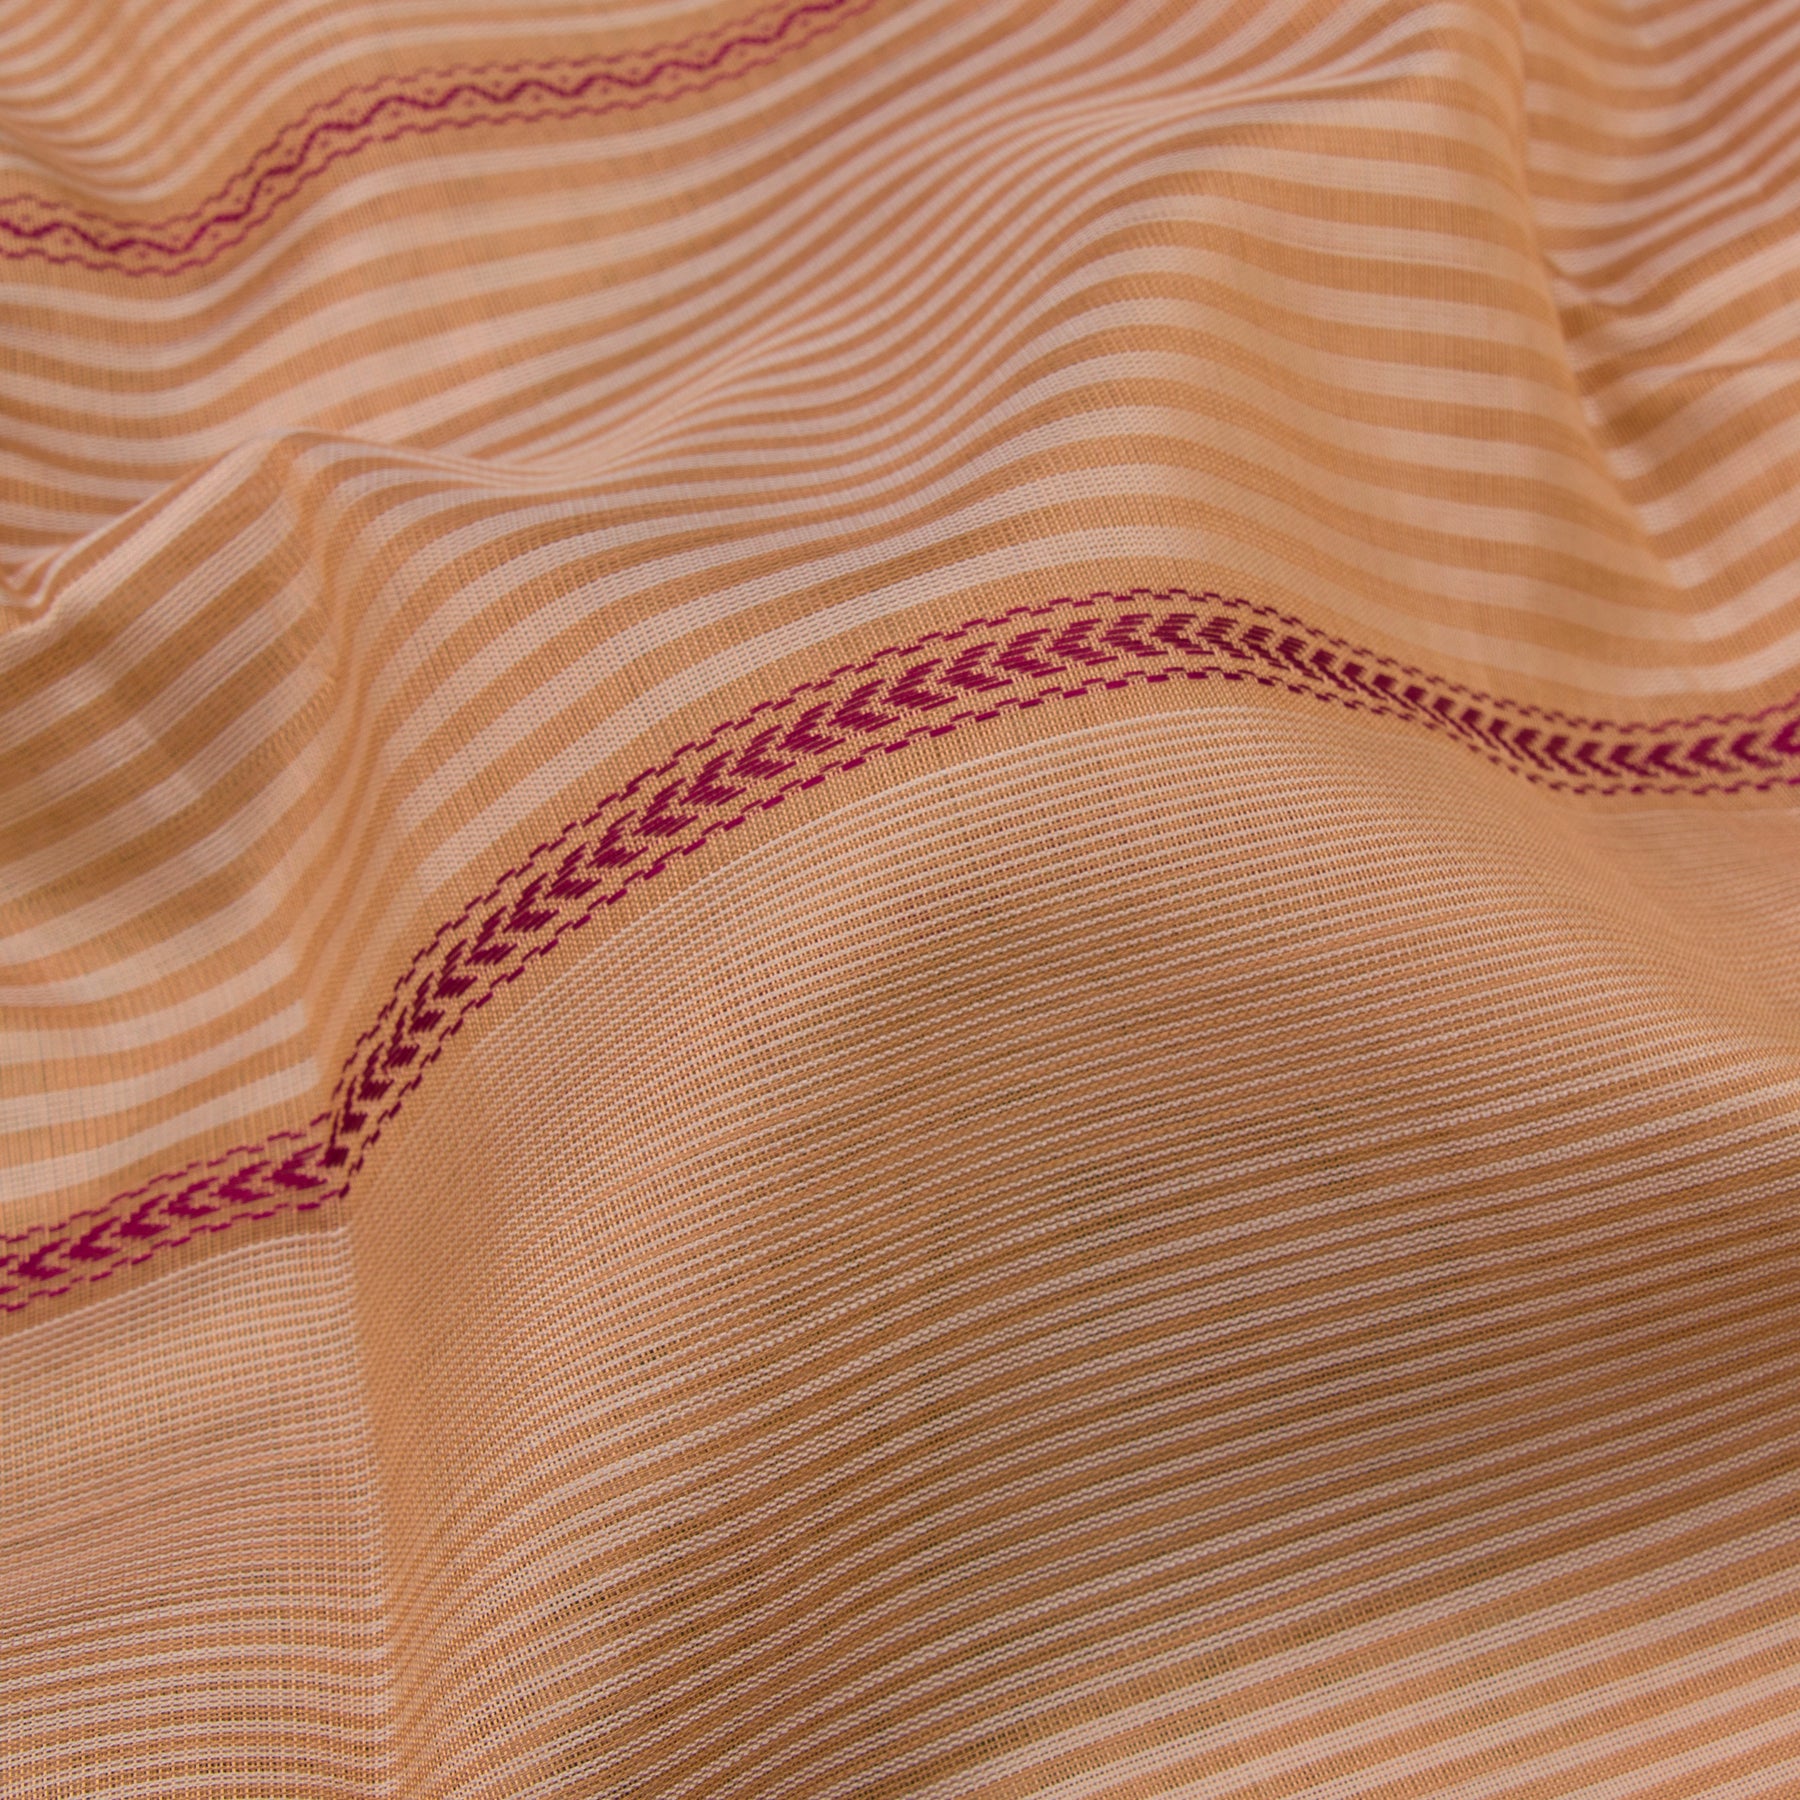 Kanakavalli Silk/Cotton Sari 22-598-hs005-13690 - Fabric View